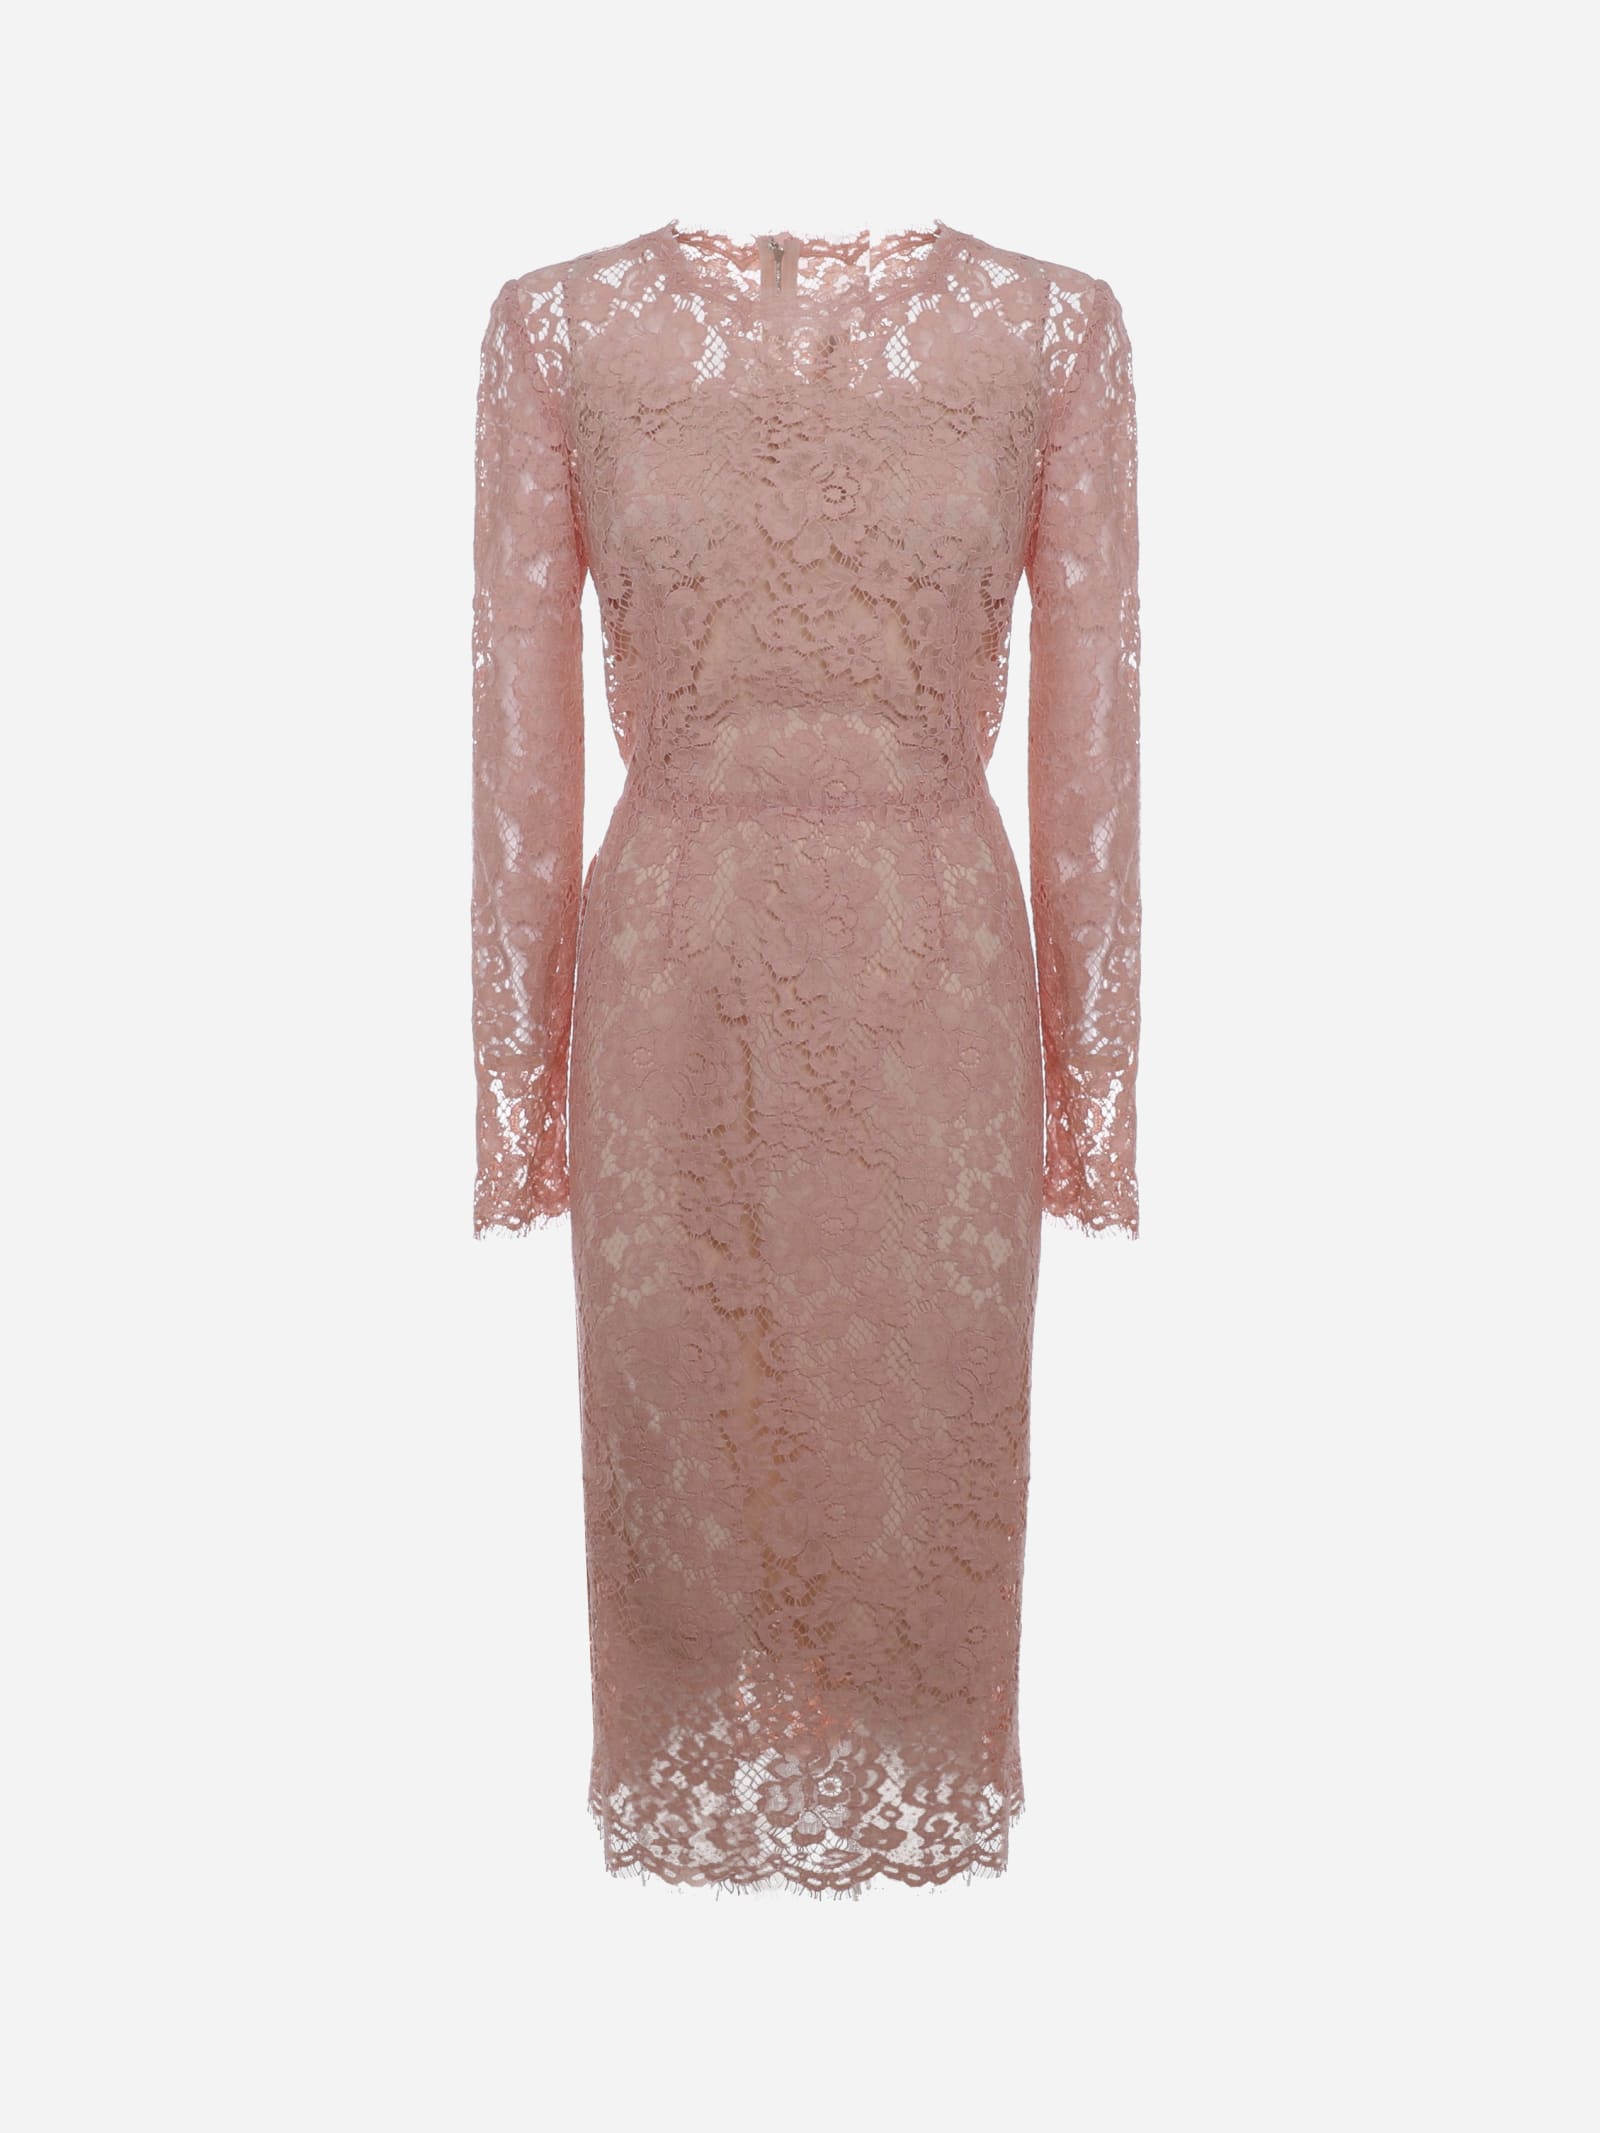 Dolce & Gabbana Longuette Dress Made Of Lace